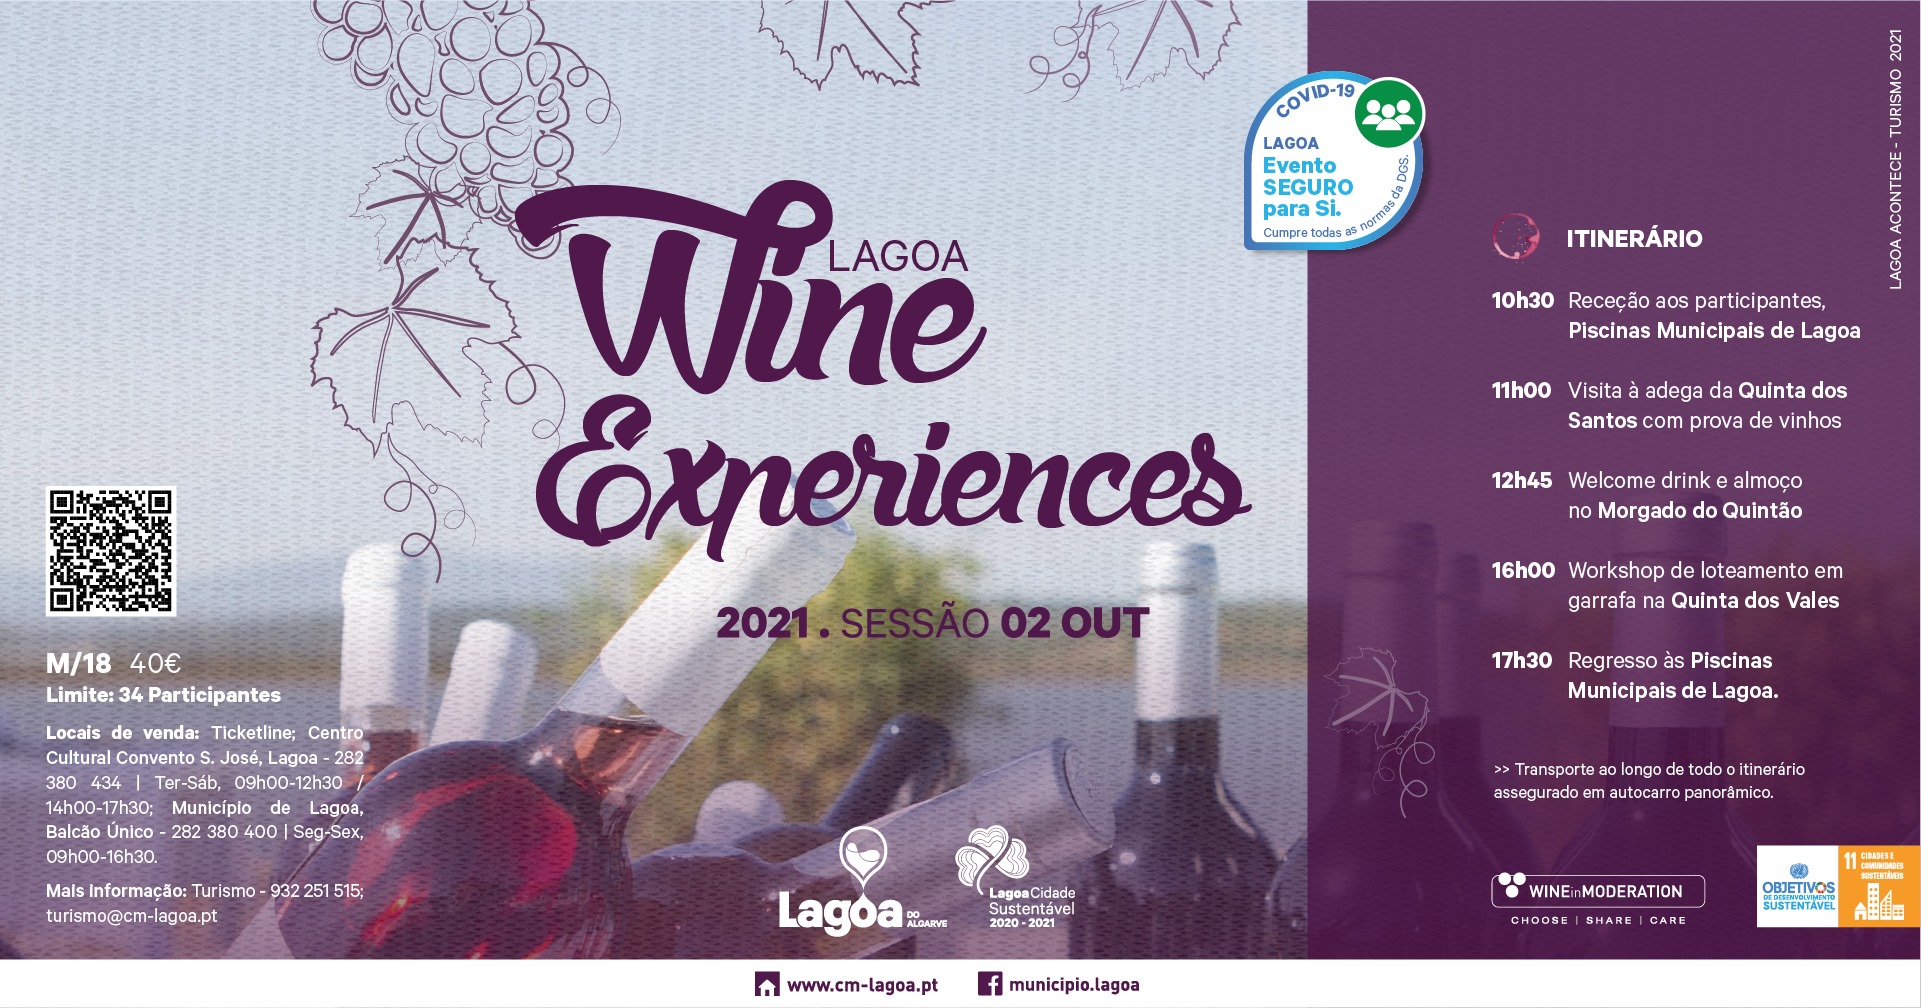 Lagoa Wine Experiences 2021